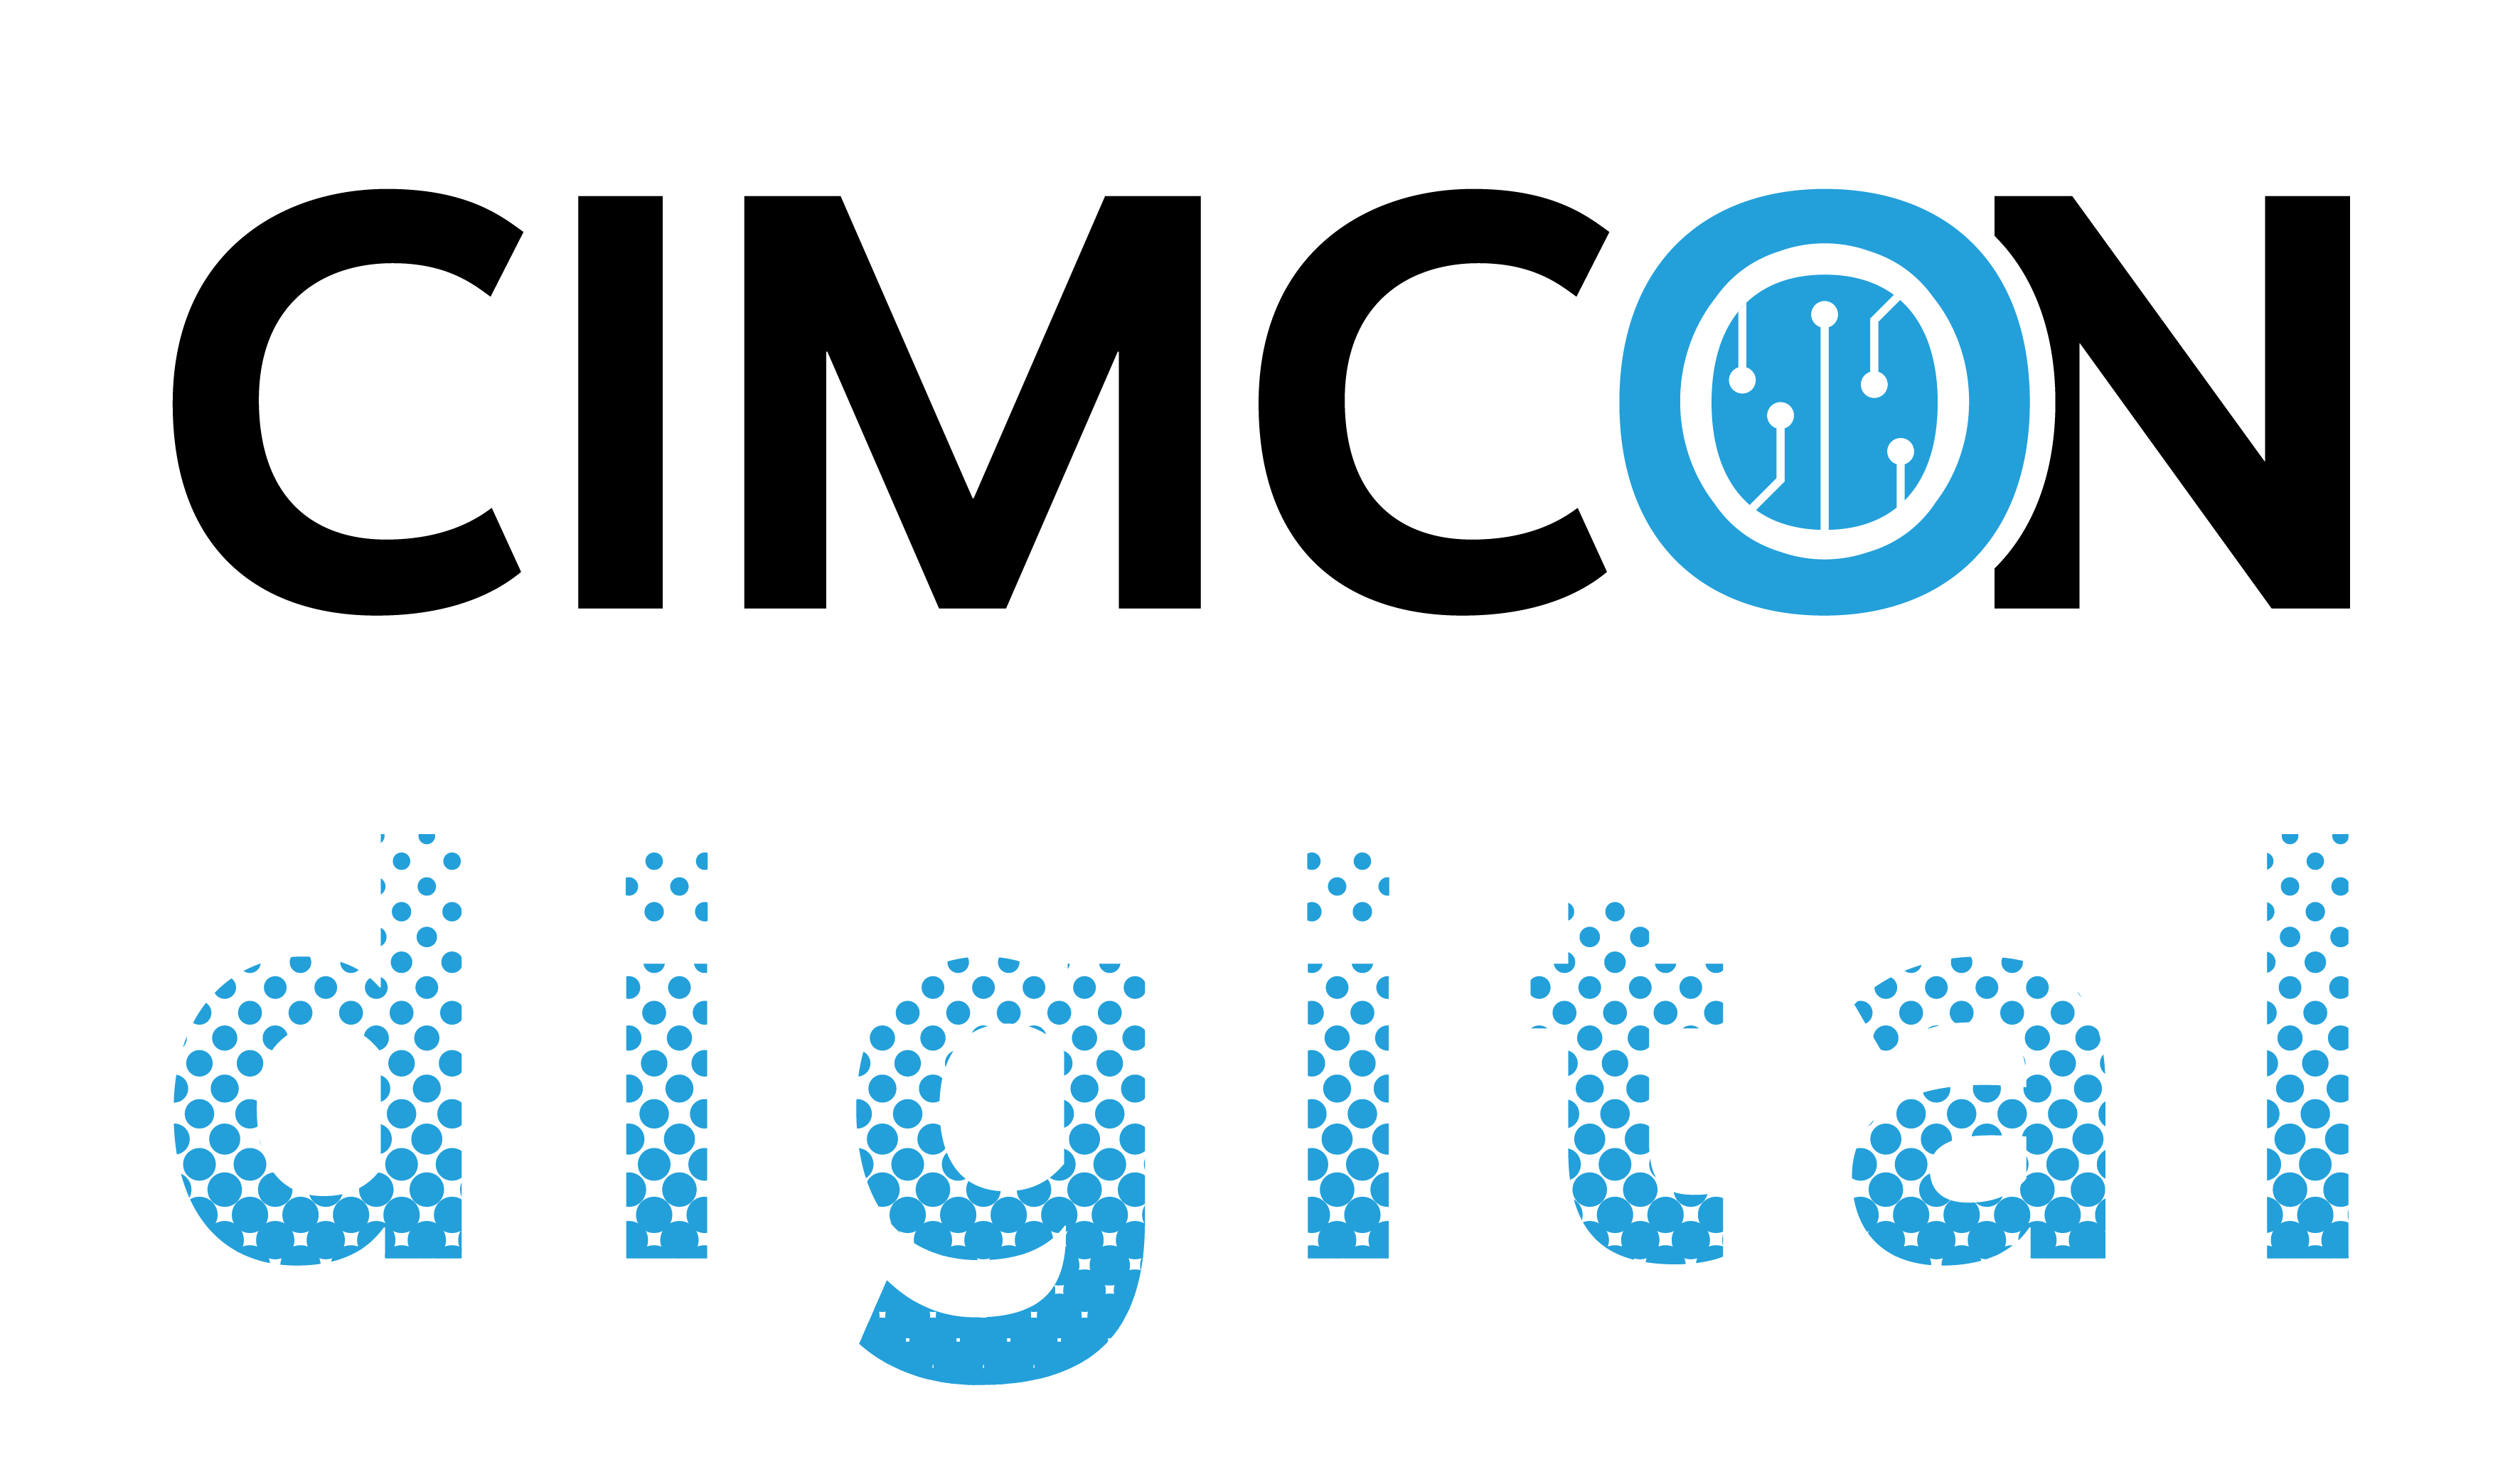 cimcon digital software technology company